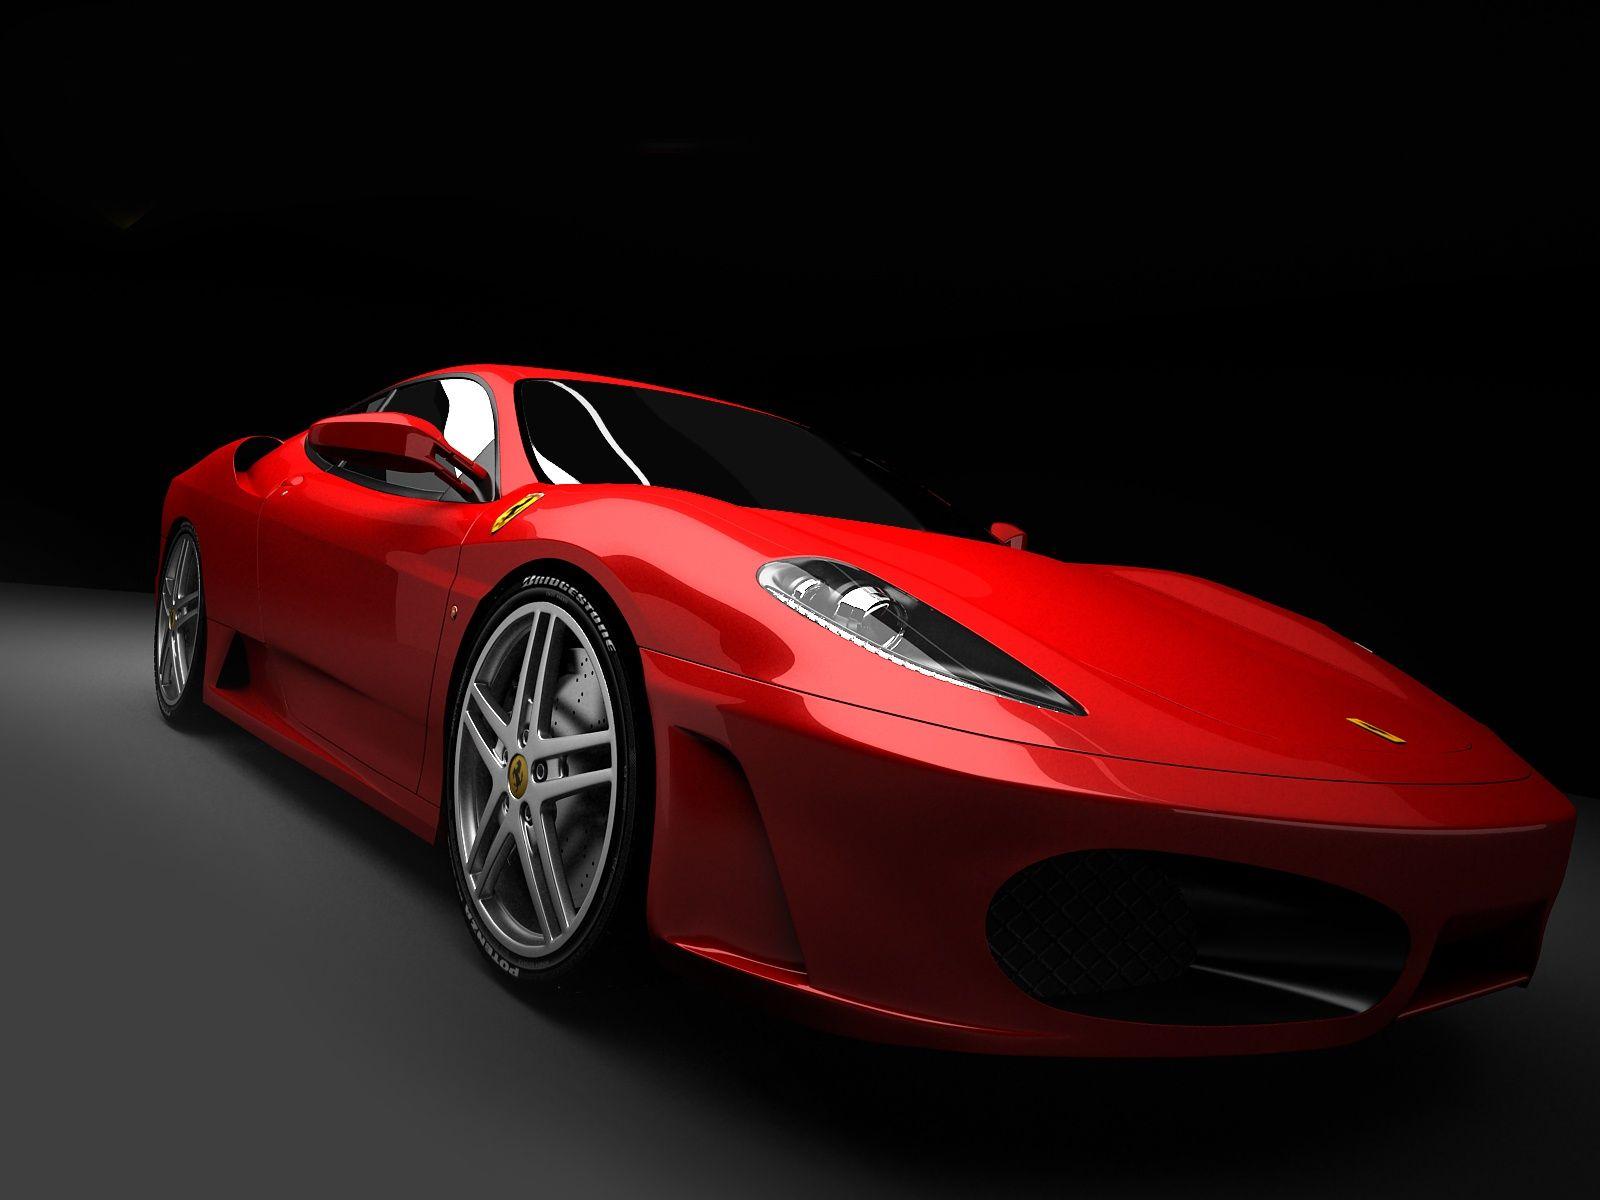 Ferrari F430 RED Wallpaper in jpg format for free download